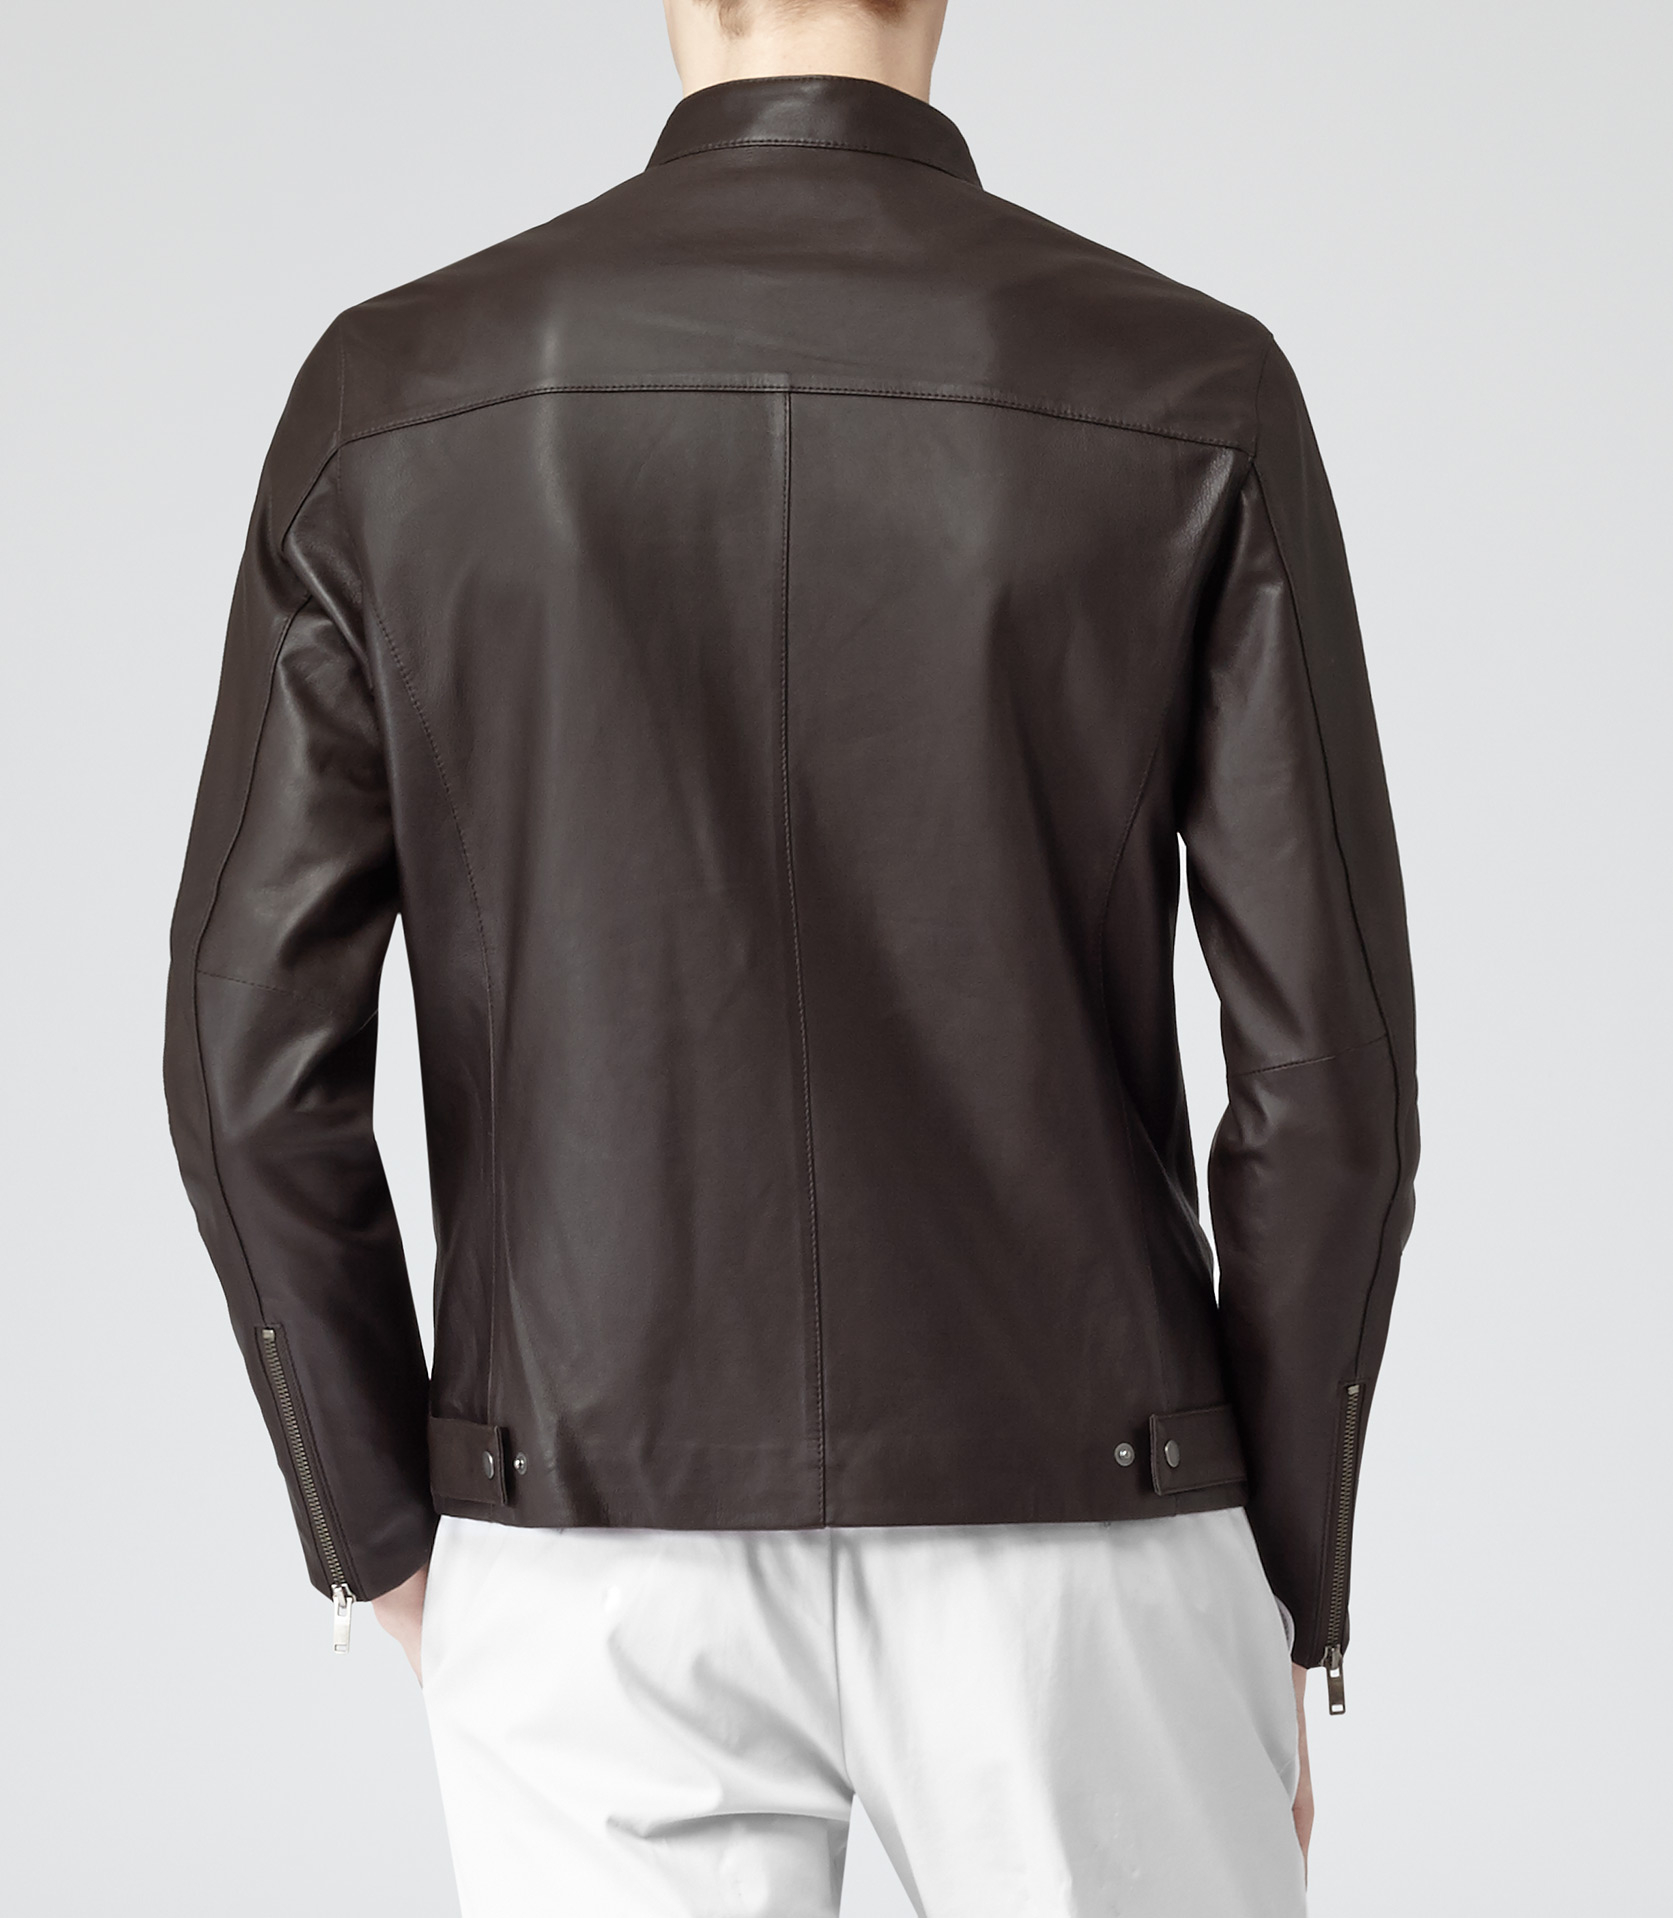 Lyst Reiss Tyler Lightweight Leather  Jacket  in Brown for Men 